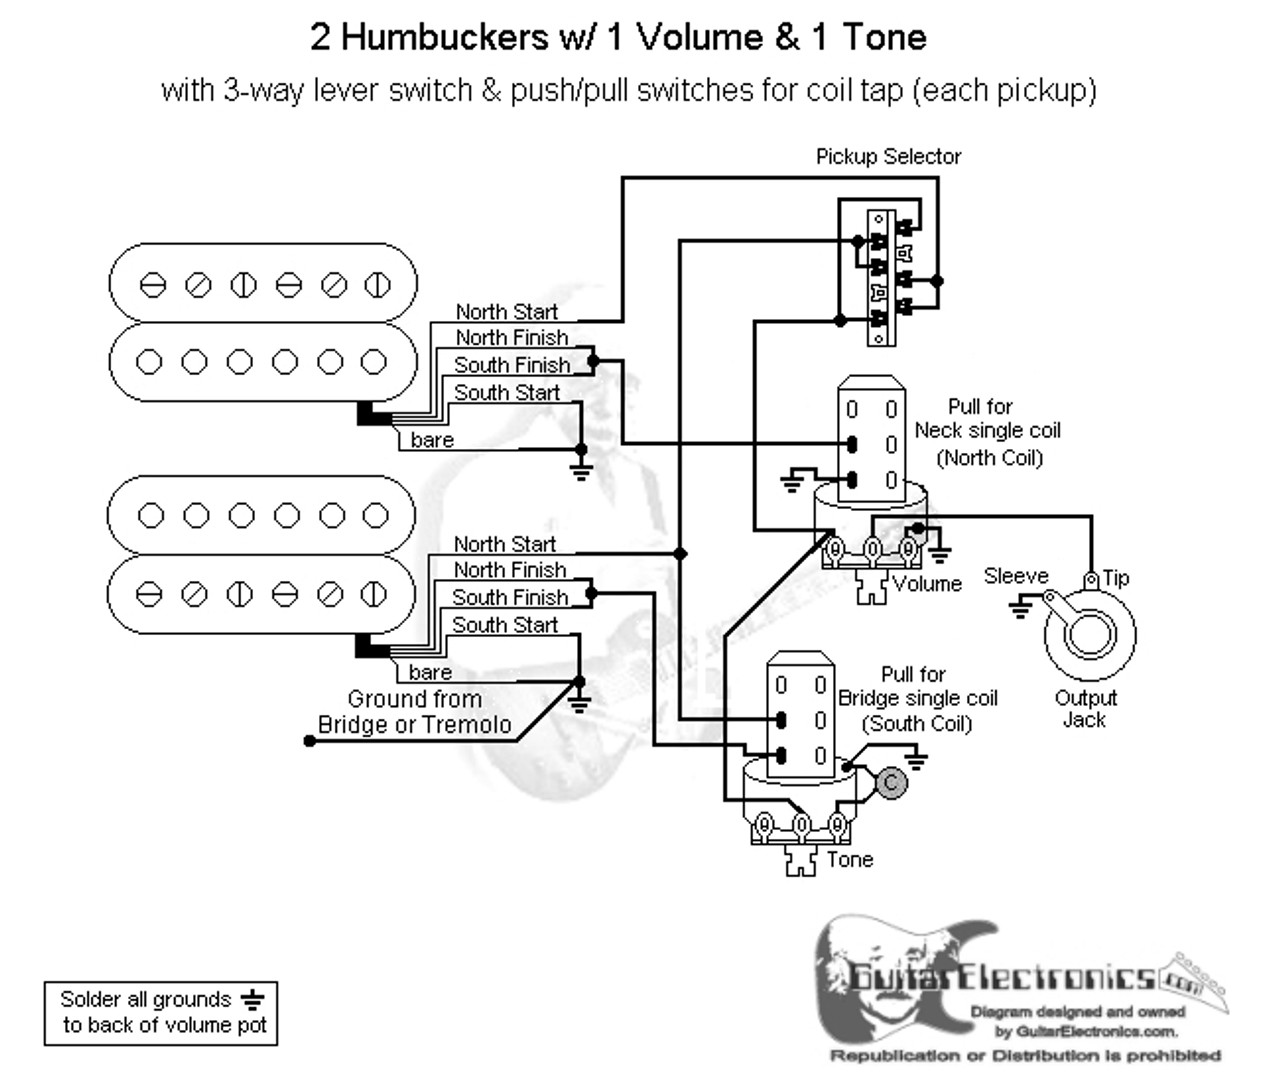 Wiring Diagram 2 Humbuckers 1 Volume 1 Tone : 2 Humbuckers